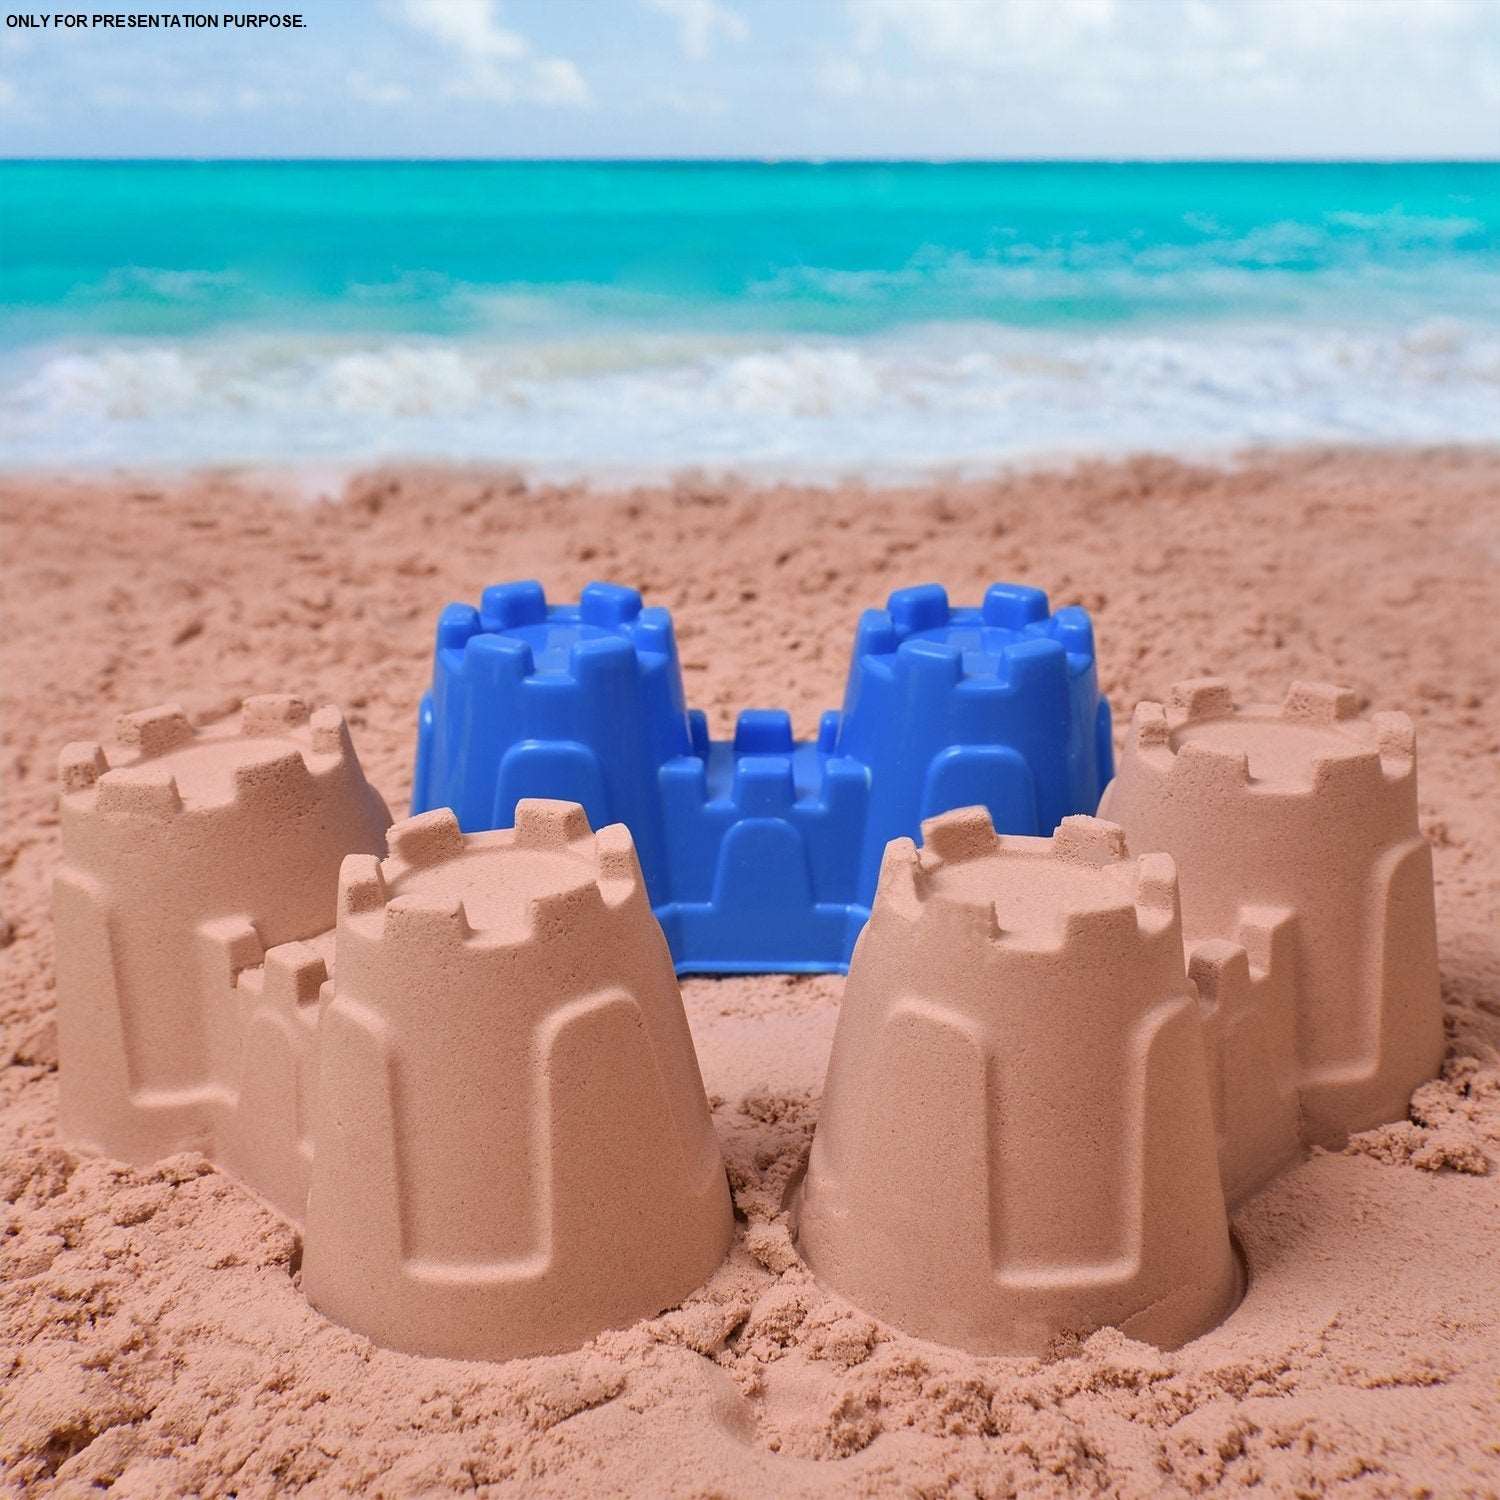 AZi TOYS Beach Sand Bucket Toy Set for Kids  - 7 pcs